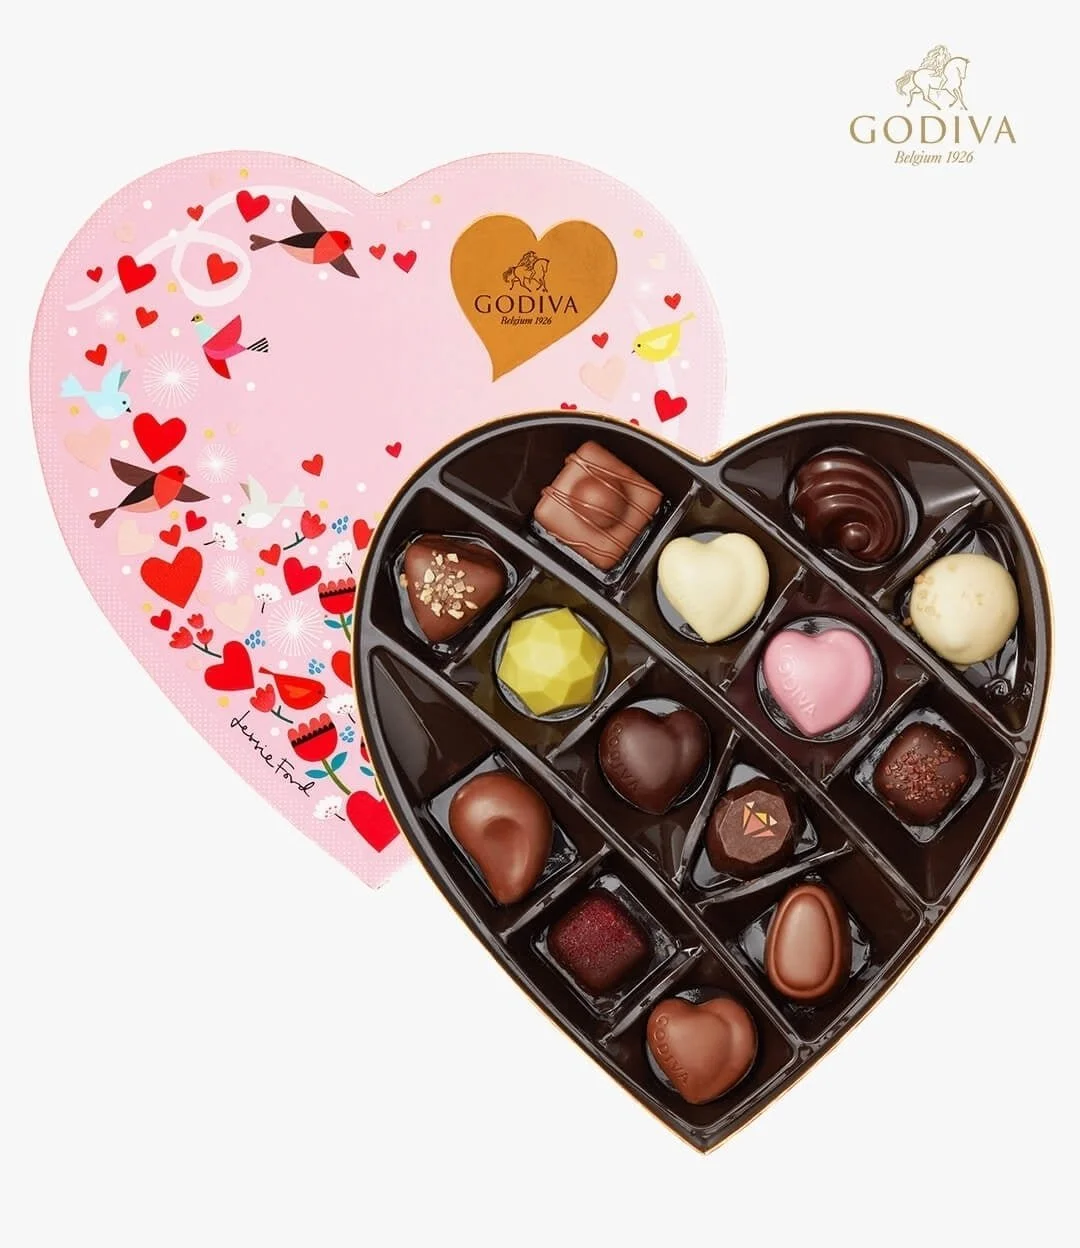 Valentine's Day Paper Heart Chocolate Gift Box 